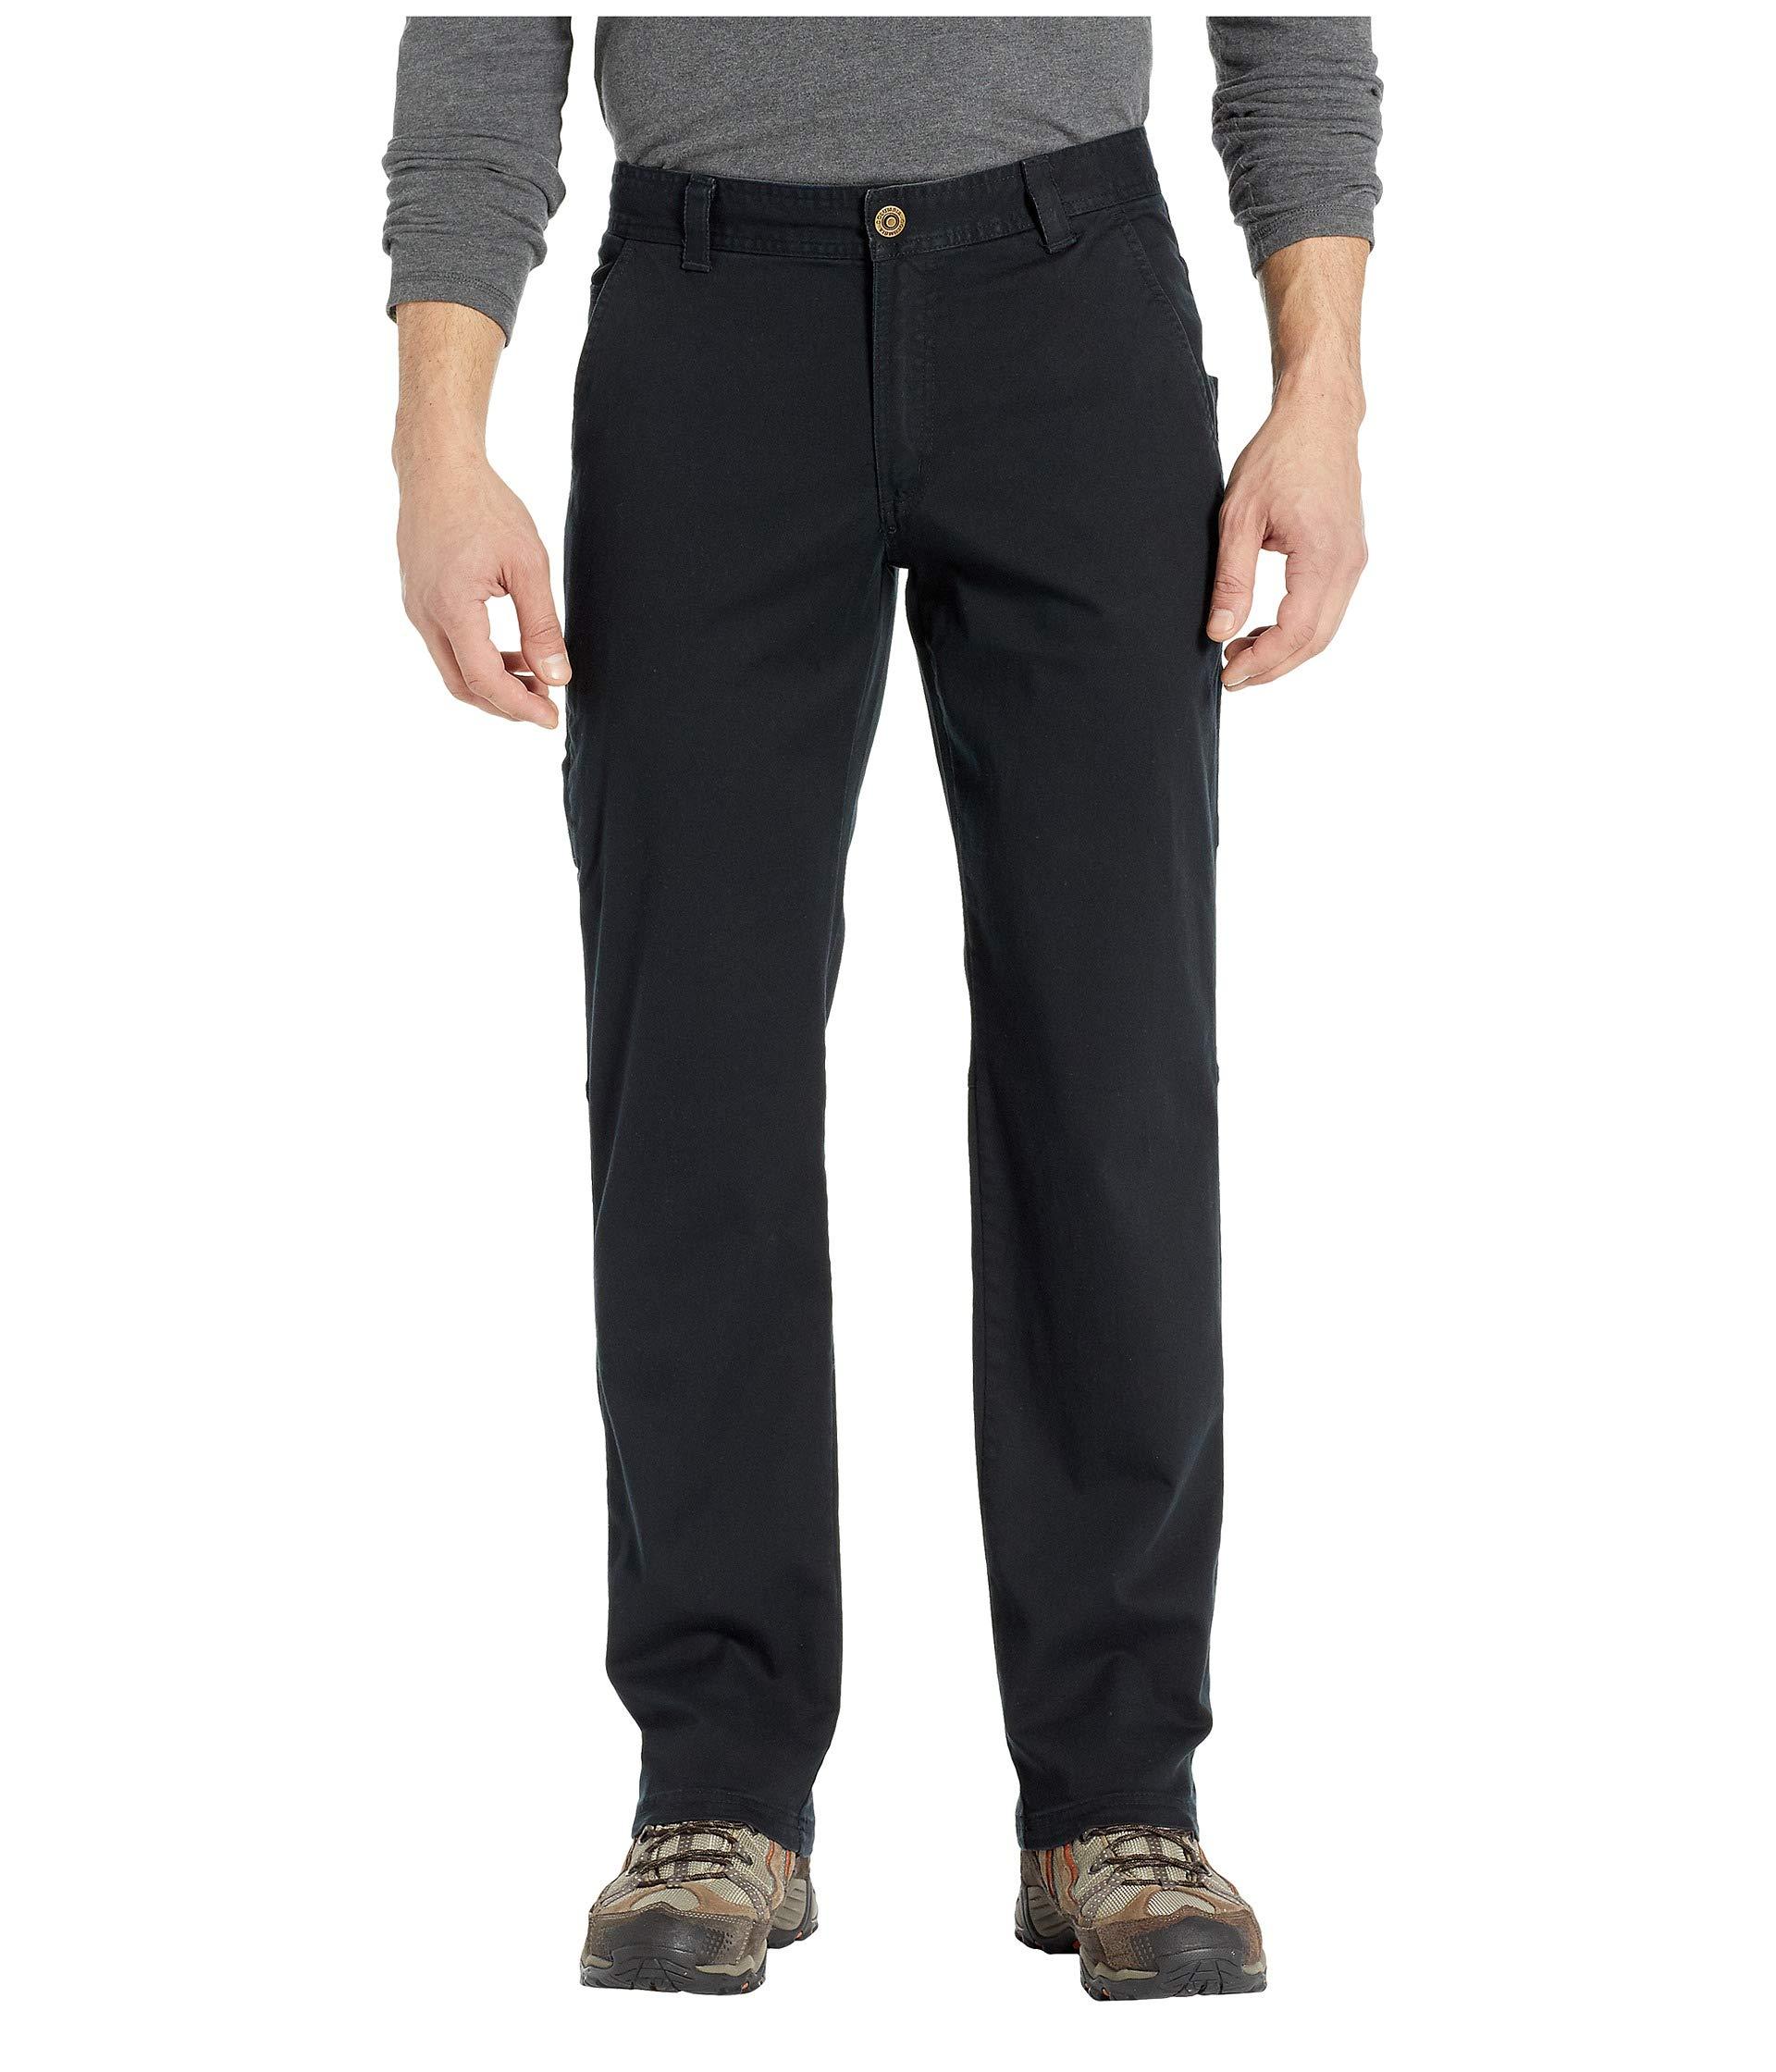 Columbia Cotton Ultimate Roctm Flex Pants in Black for Men - Lyst